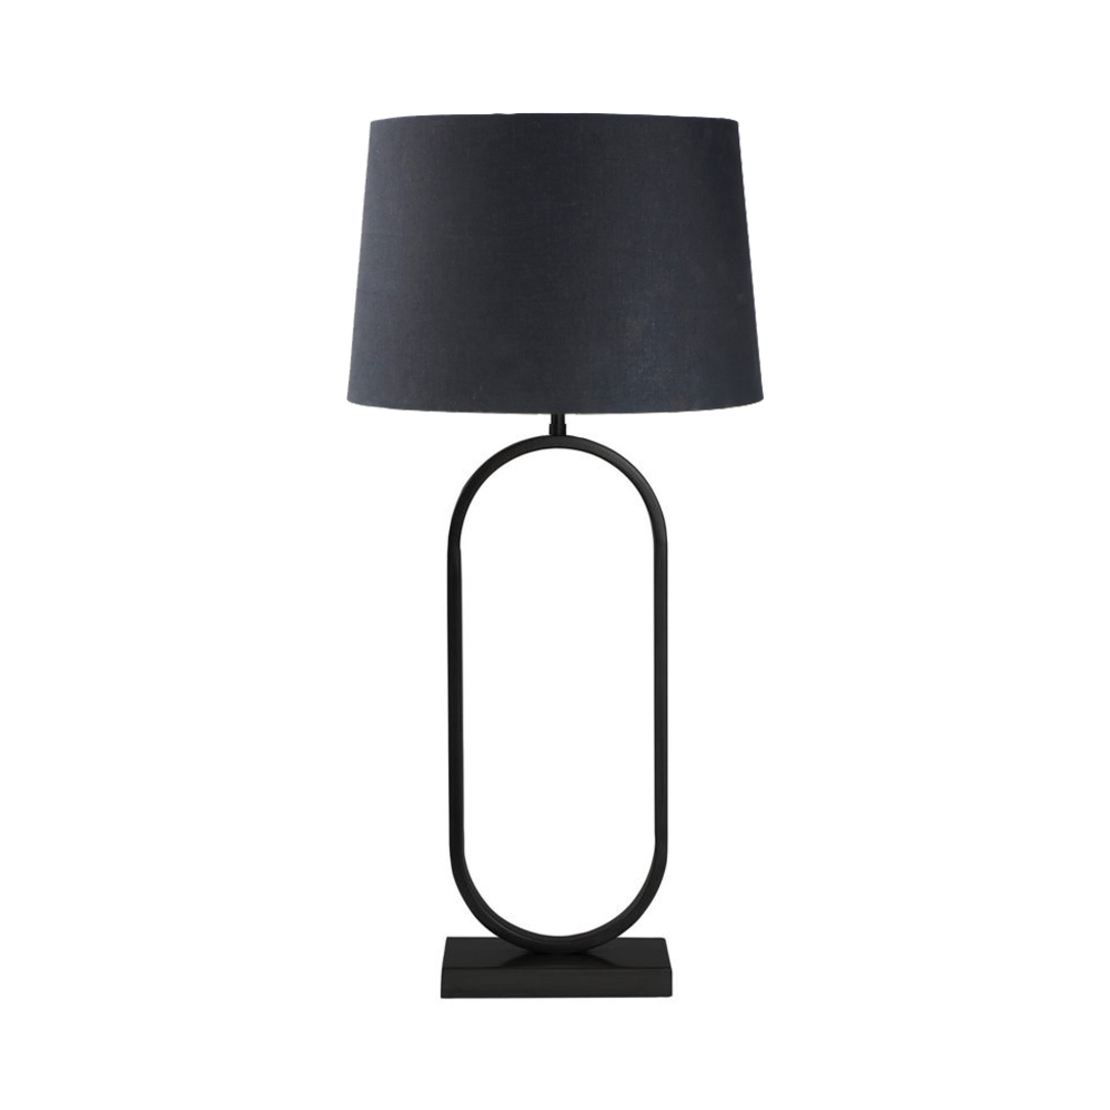 NEW ITEM 9 LAMP TABLE IRON BLACK MATTE BLACK CE IN